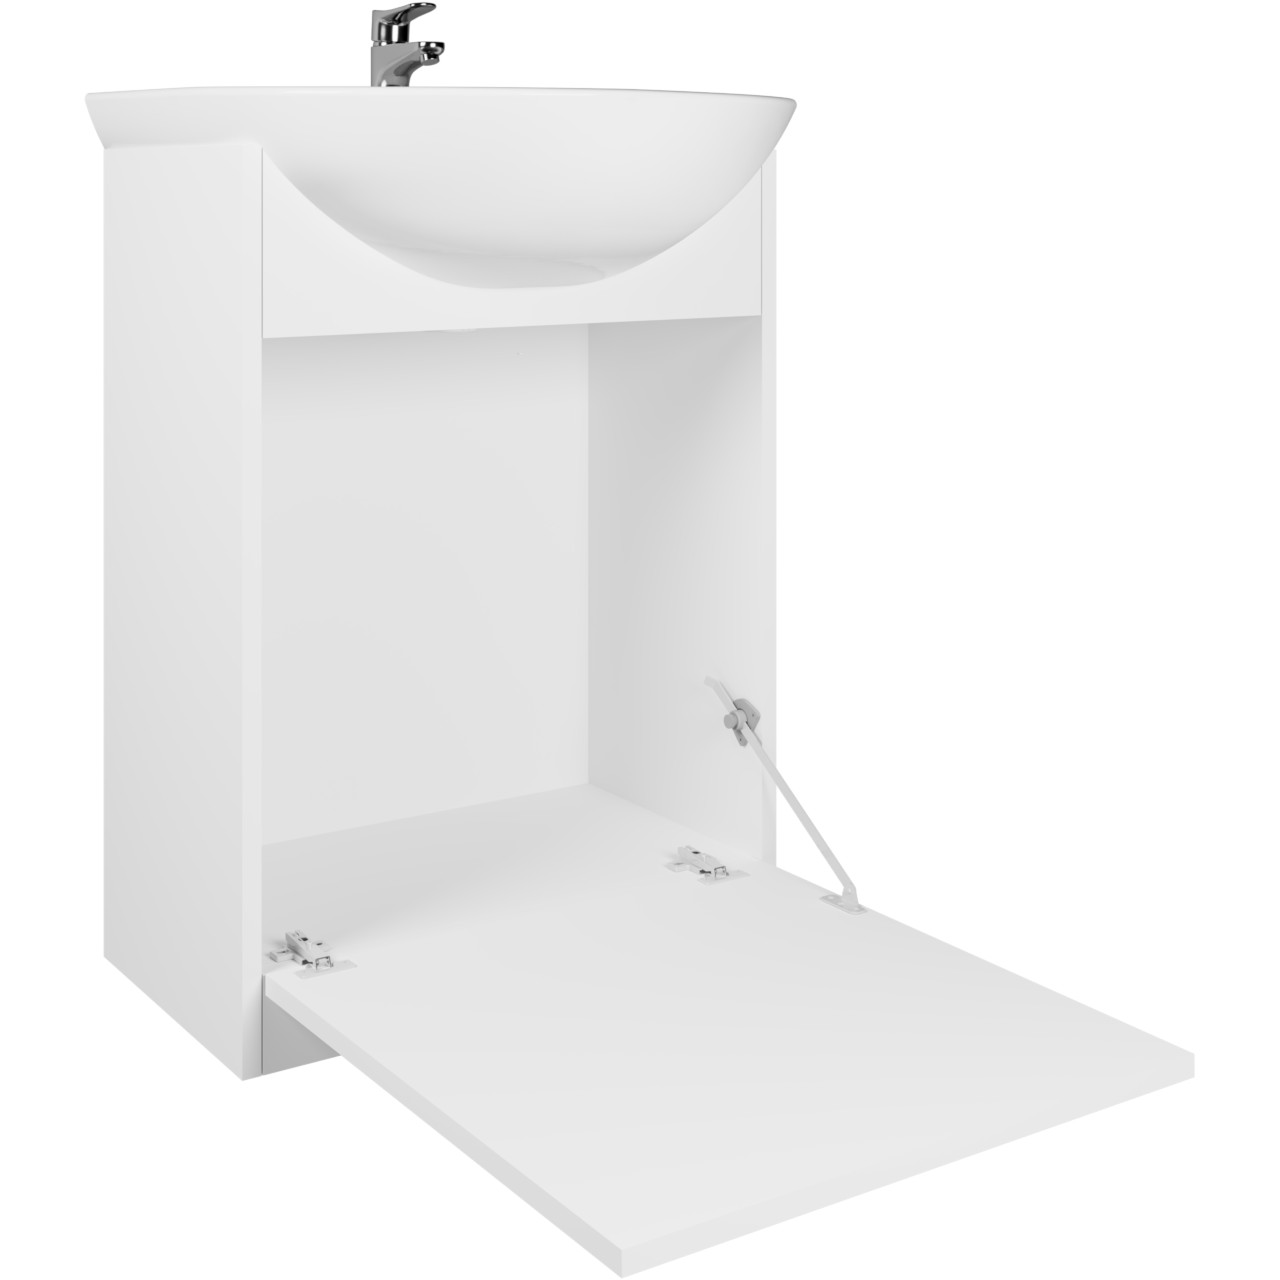 Bathroom Furniture with Mirror NEPPA LED white laminate